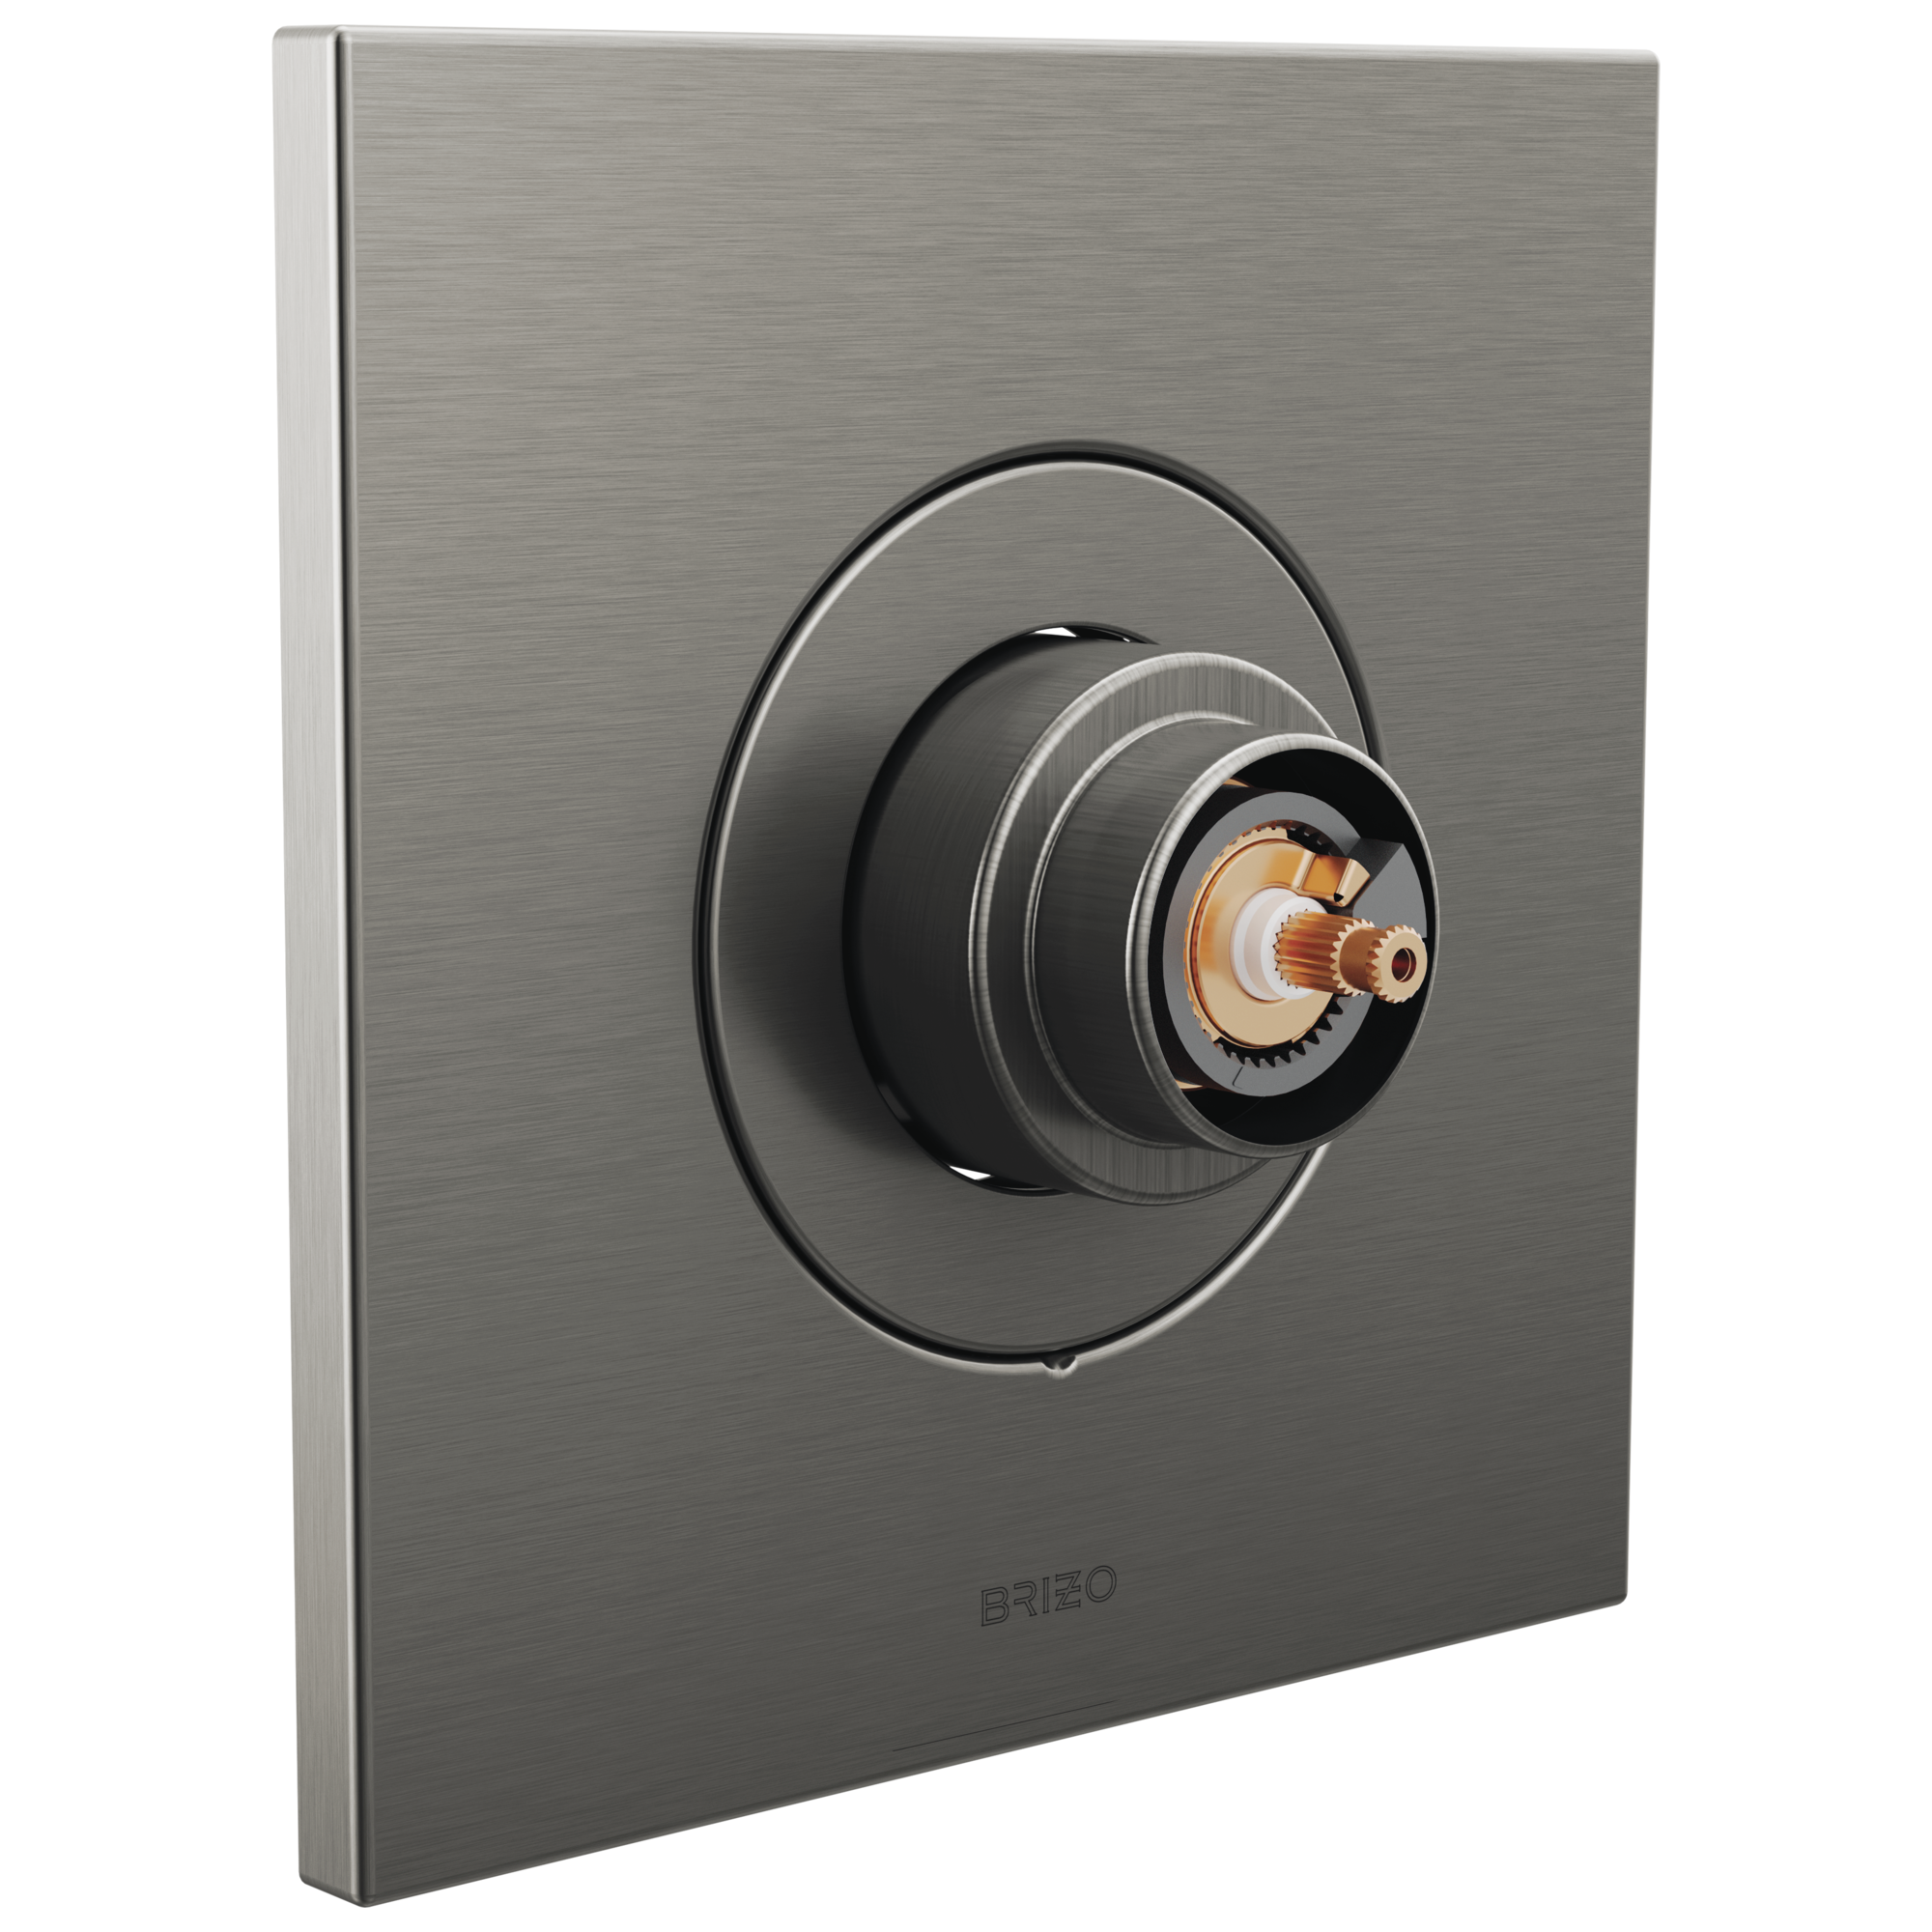 Brizo Frank Lloyd Wright®: Sensori® Thermostatic Valve Trim - Less Handle